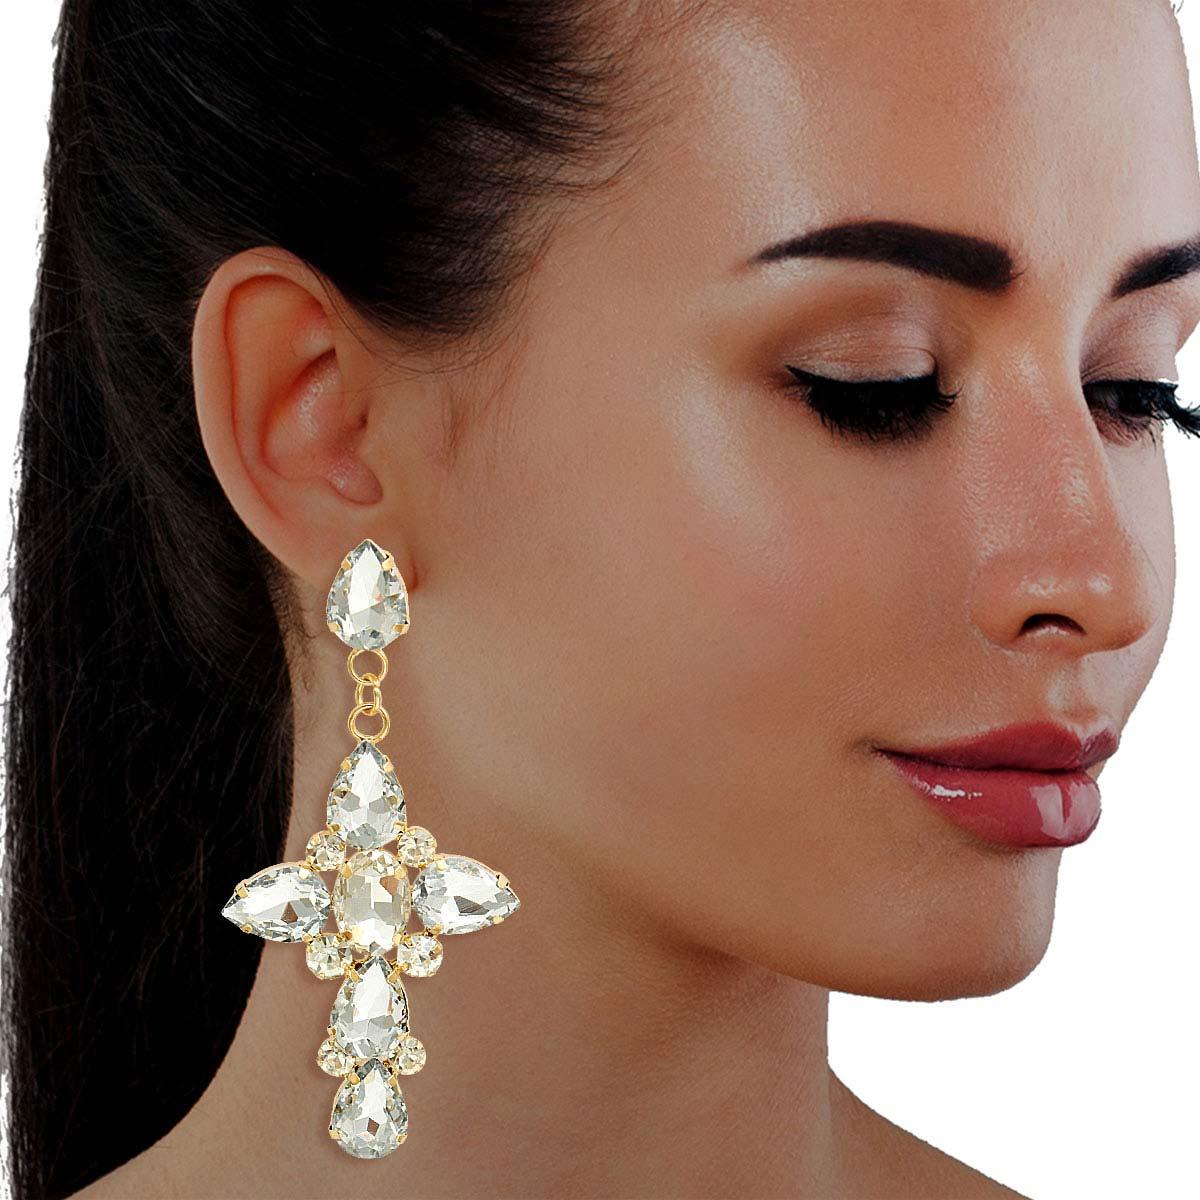 Stylish Women's Gold-tone Cross Earrings: Religious Fashion Favorites